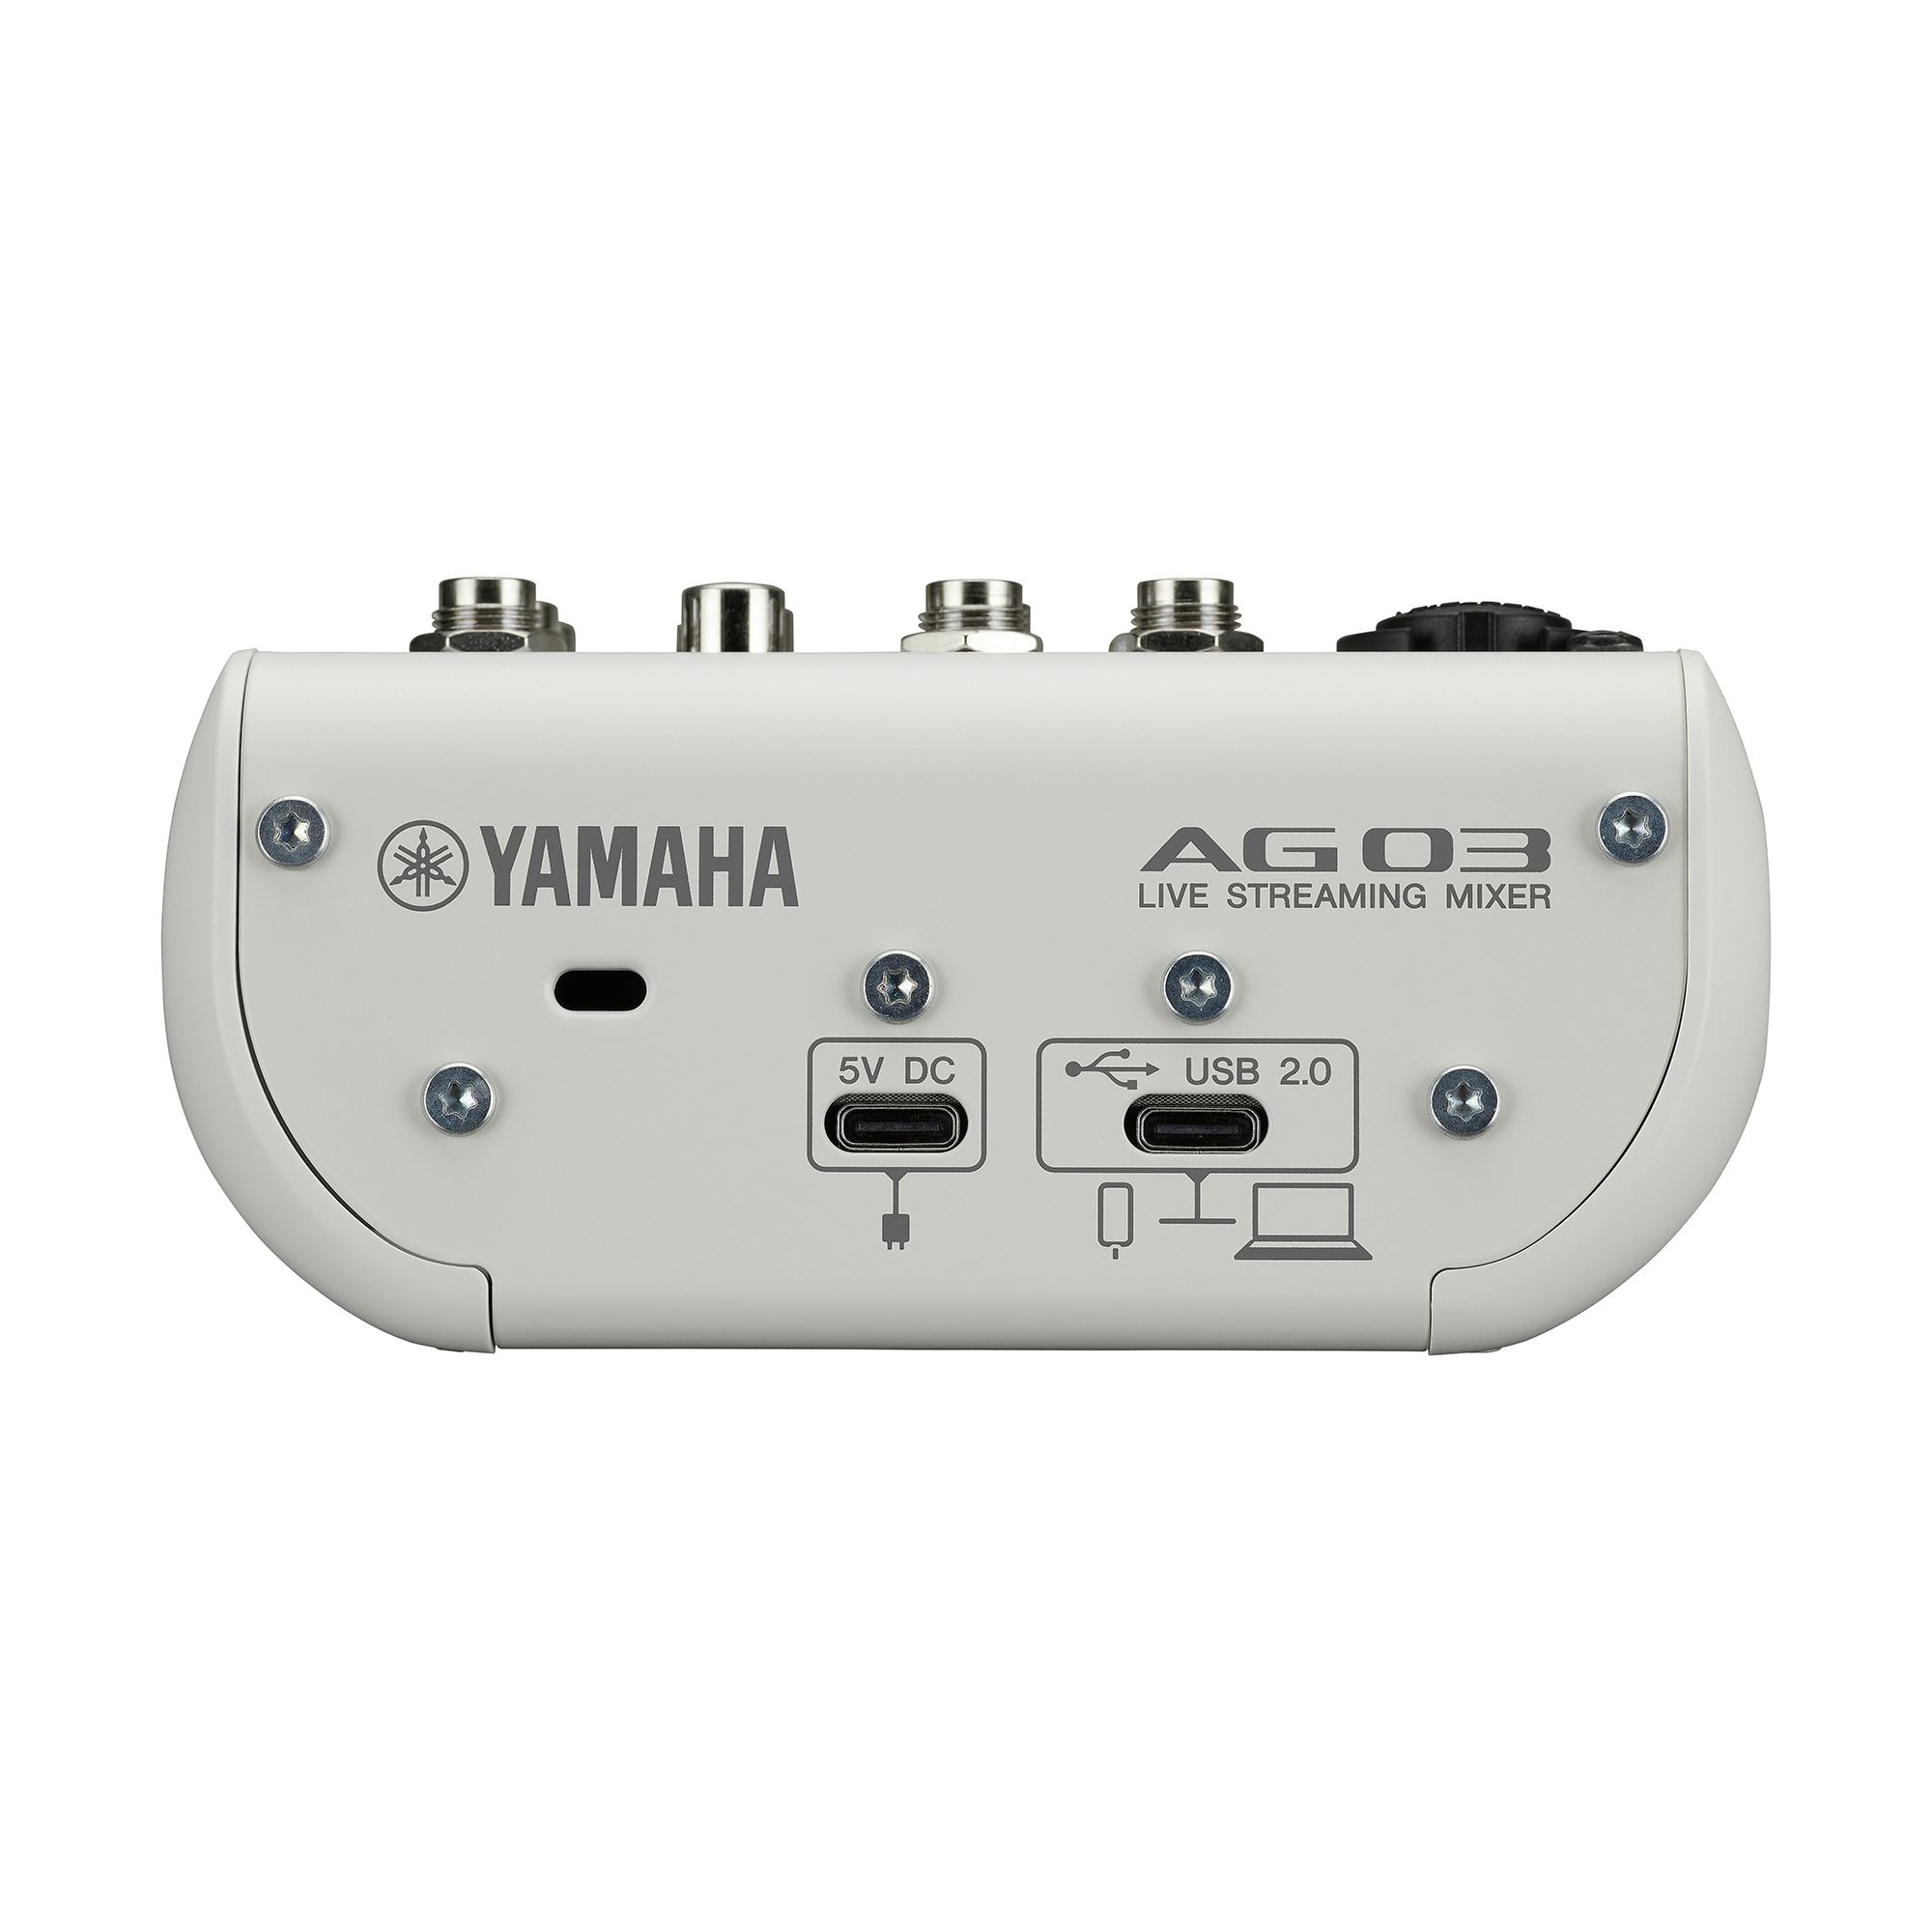 AG03MK2 3-Channel USB Mixer Accessories - Yamaha USA